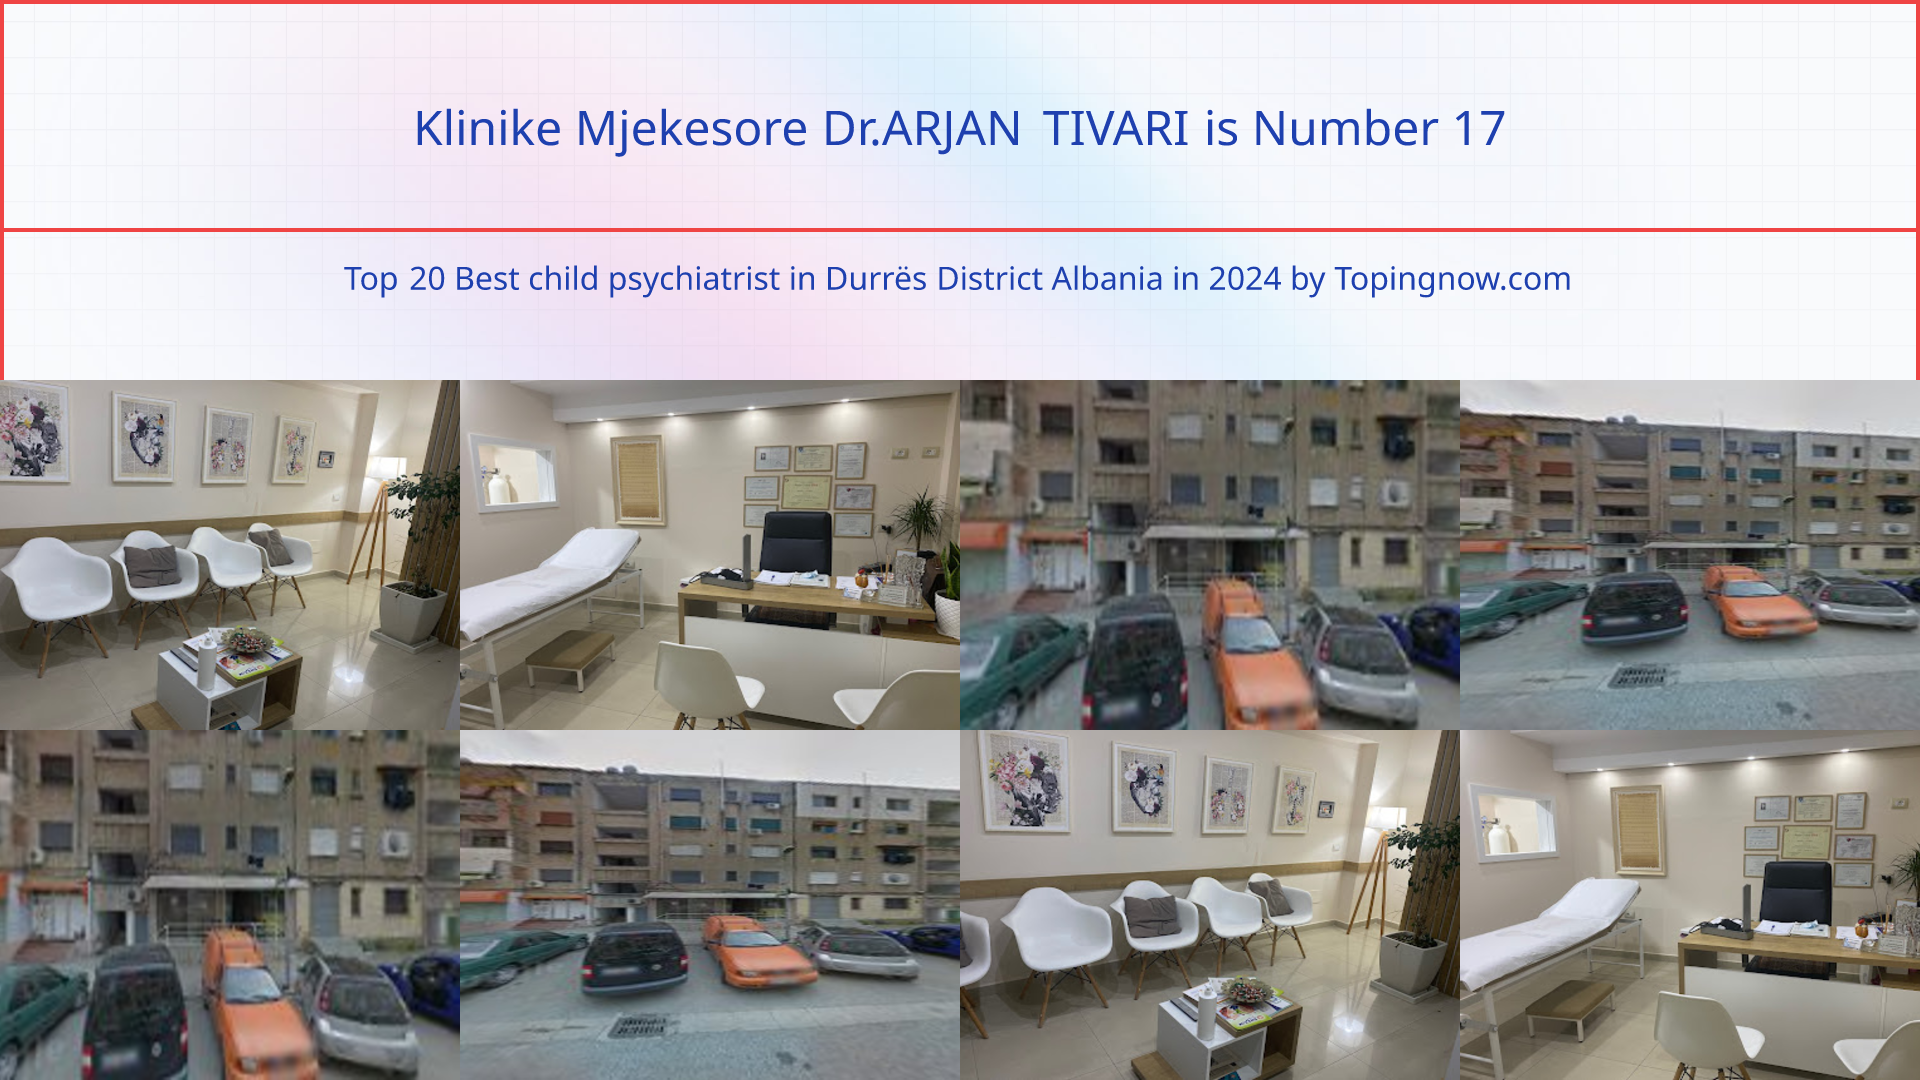 Klinike Mjekesore Dr.ARJAN TIVARI: Top 20 Best child psychiatrist in Durrës District Albania in 2024